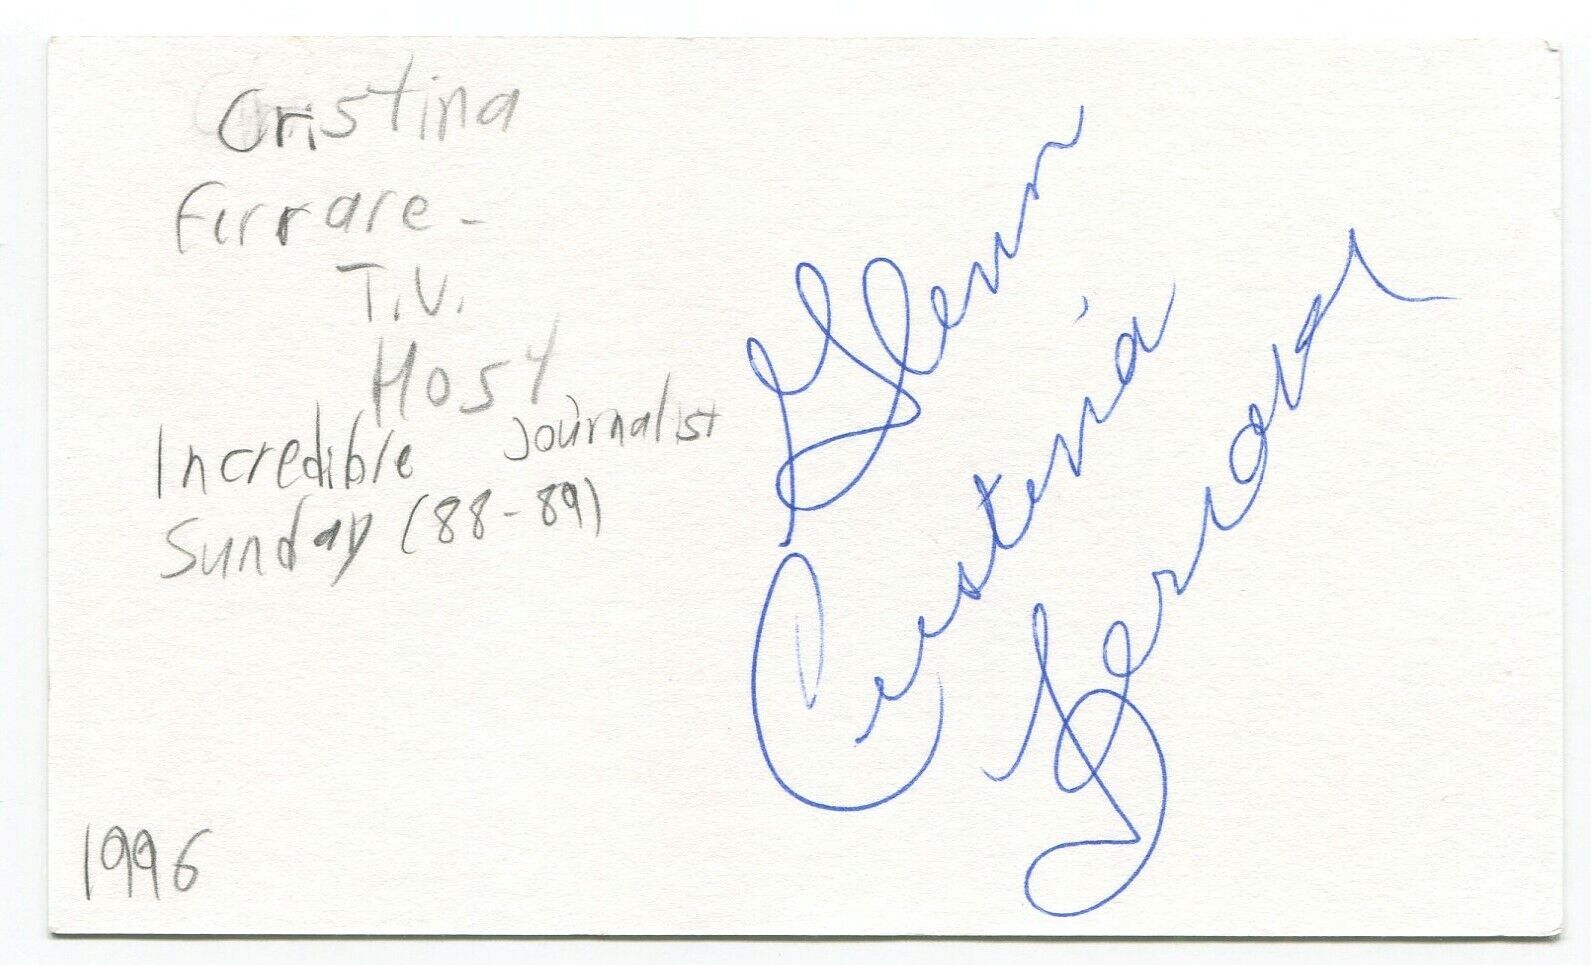 Cristina Ferrare Signed 3x5 Index Card Autographed Signature Model Host